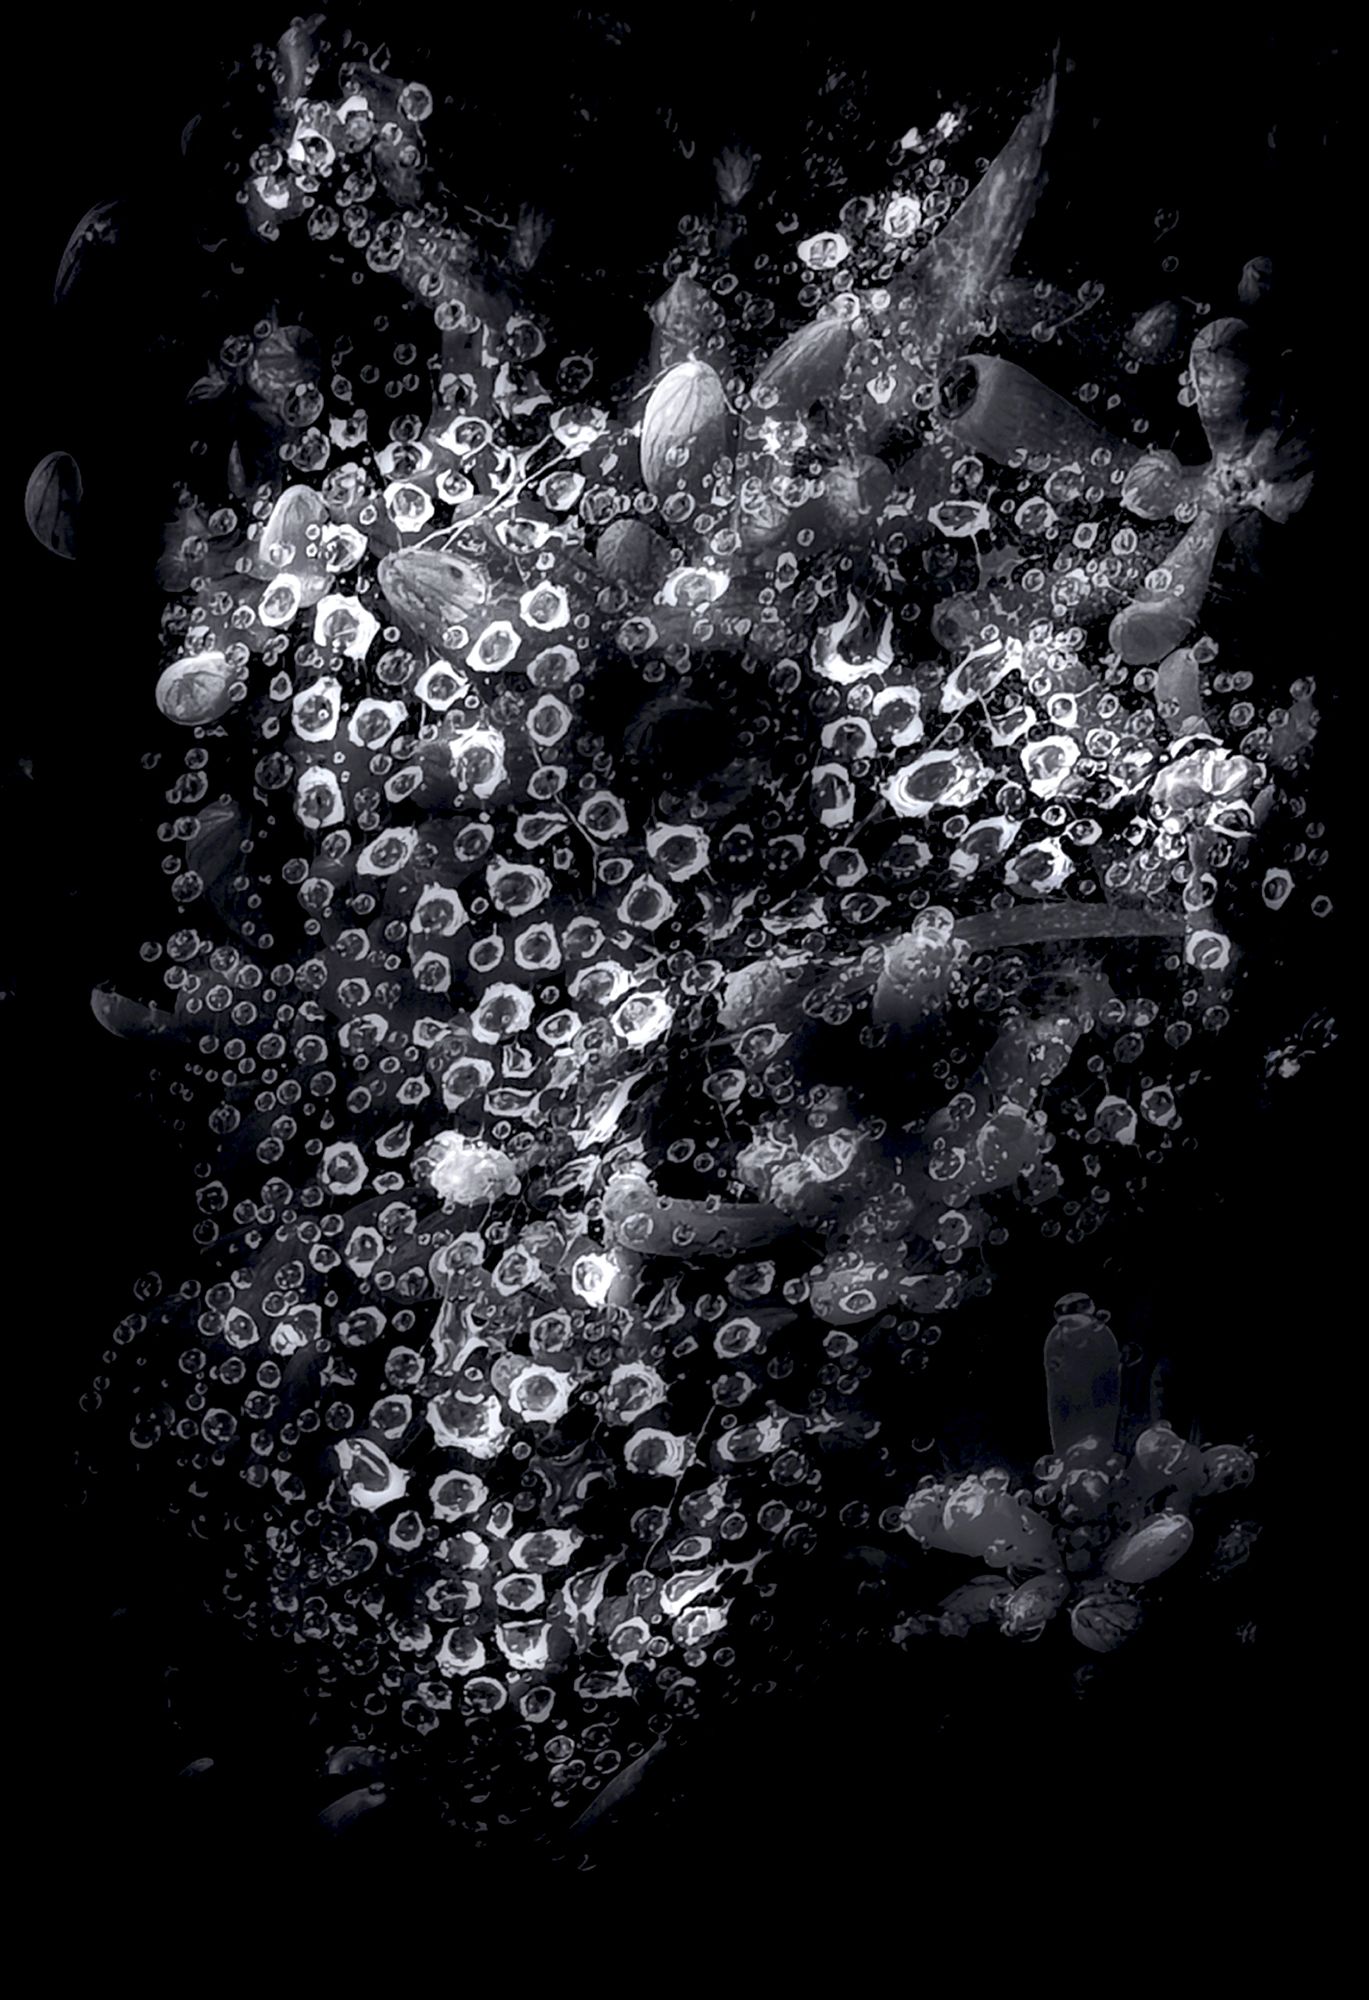 Tiny Immensity #42 - Dew Nebula ©2022 L. Aviva Diamond